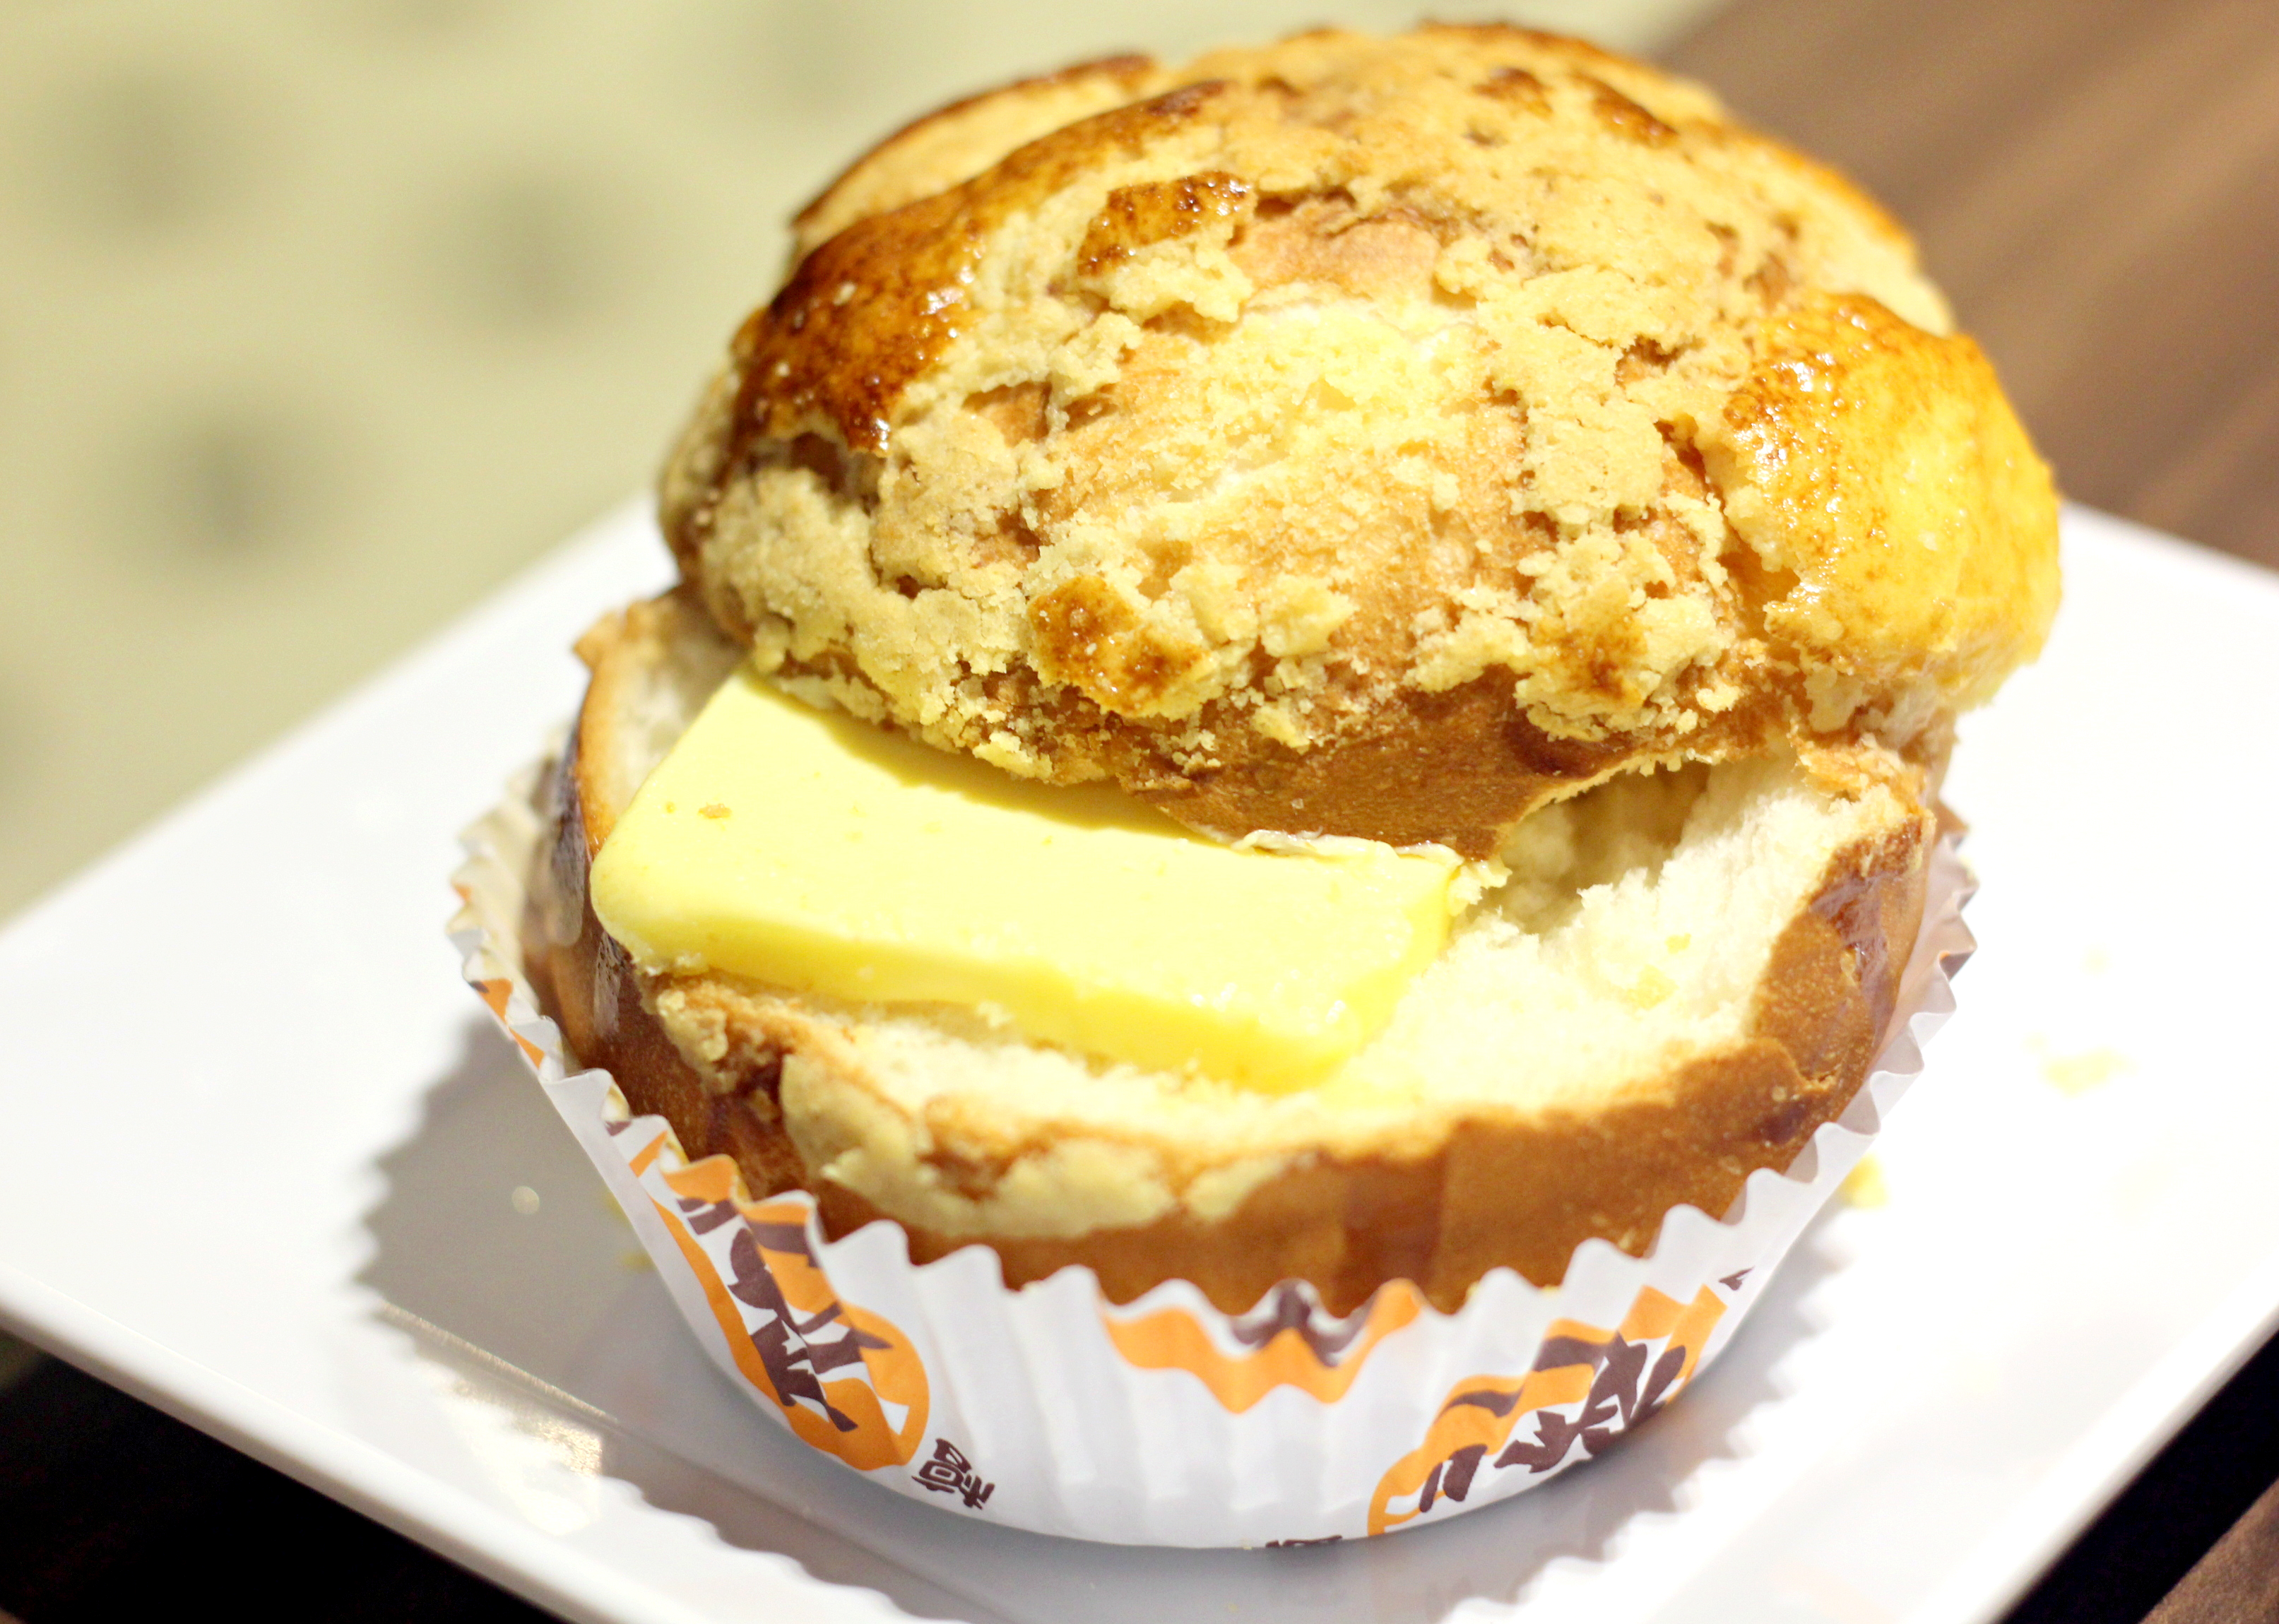 Honolulu Cafe: pineapple bun with butter